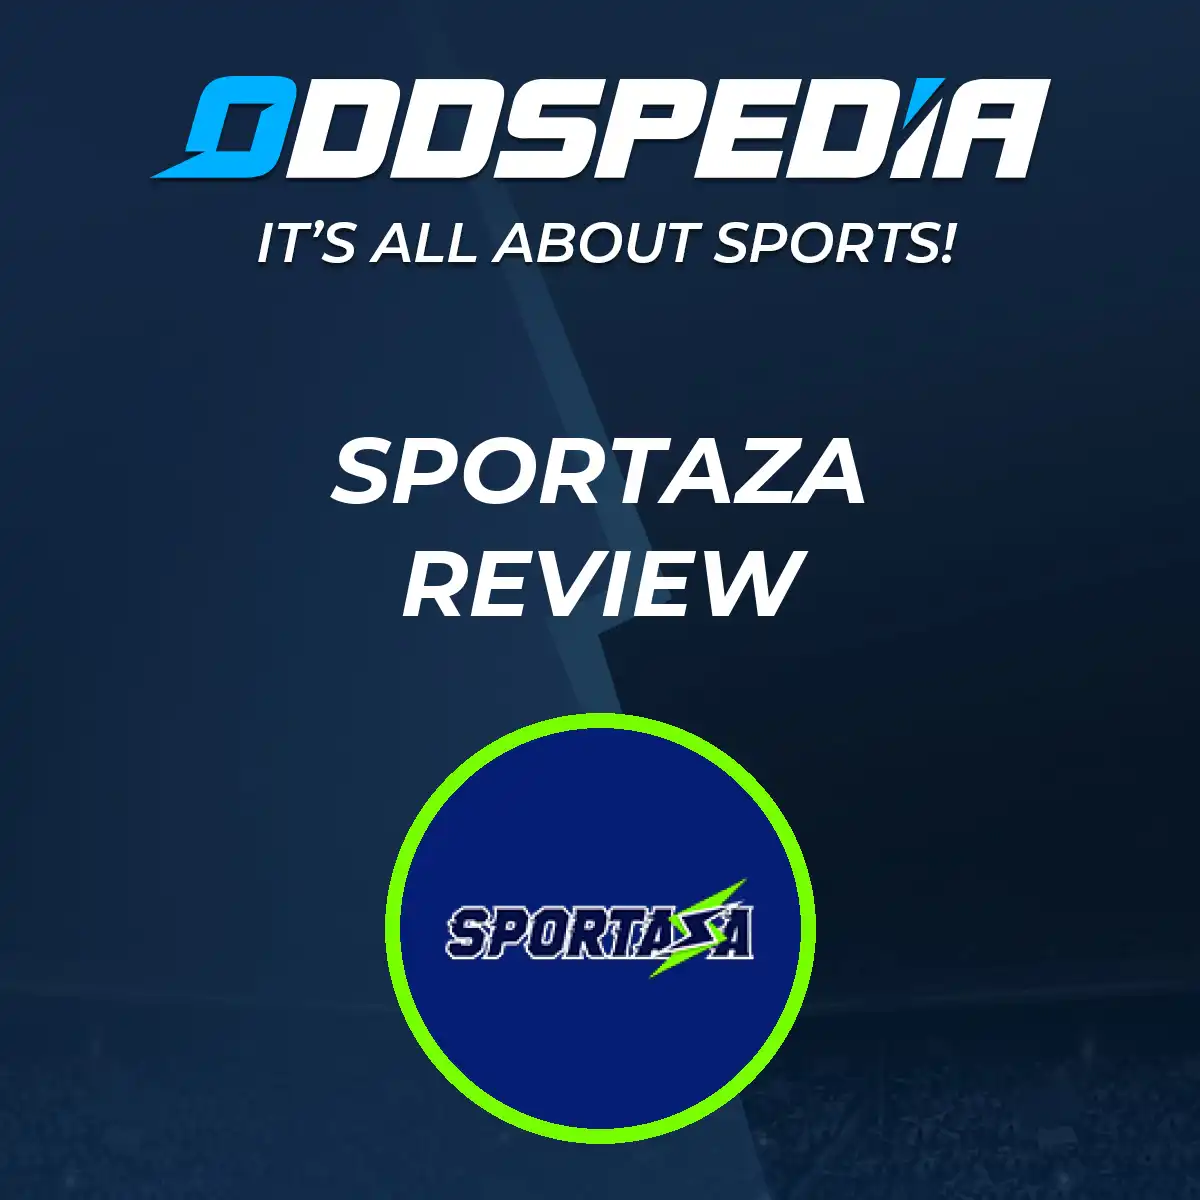 Sportaza sports